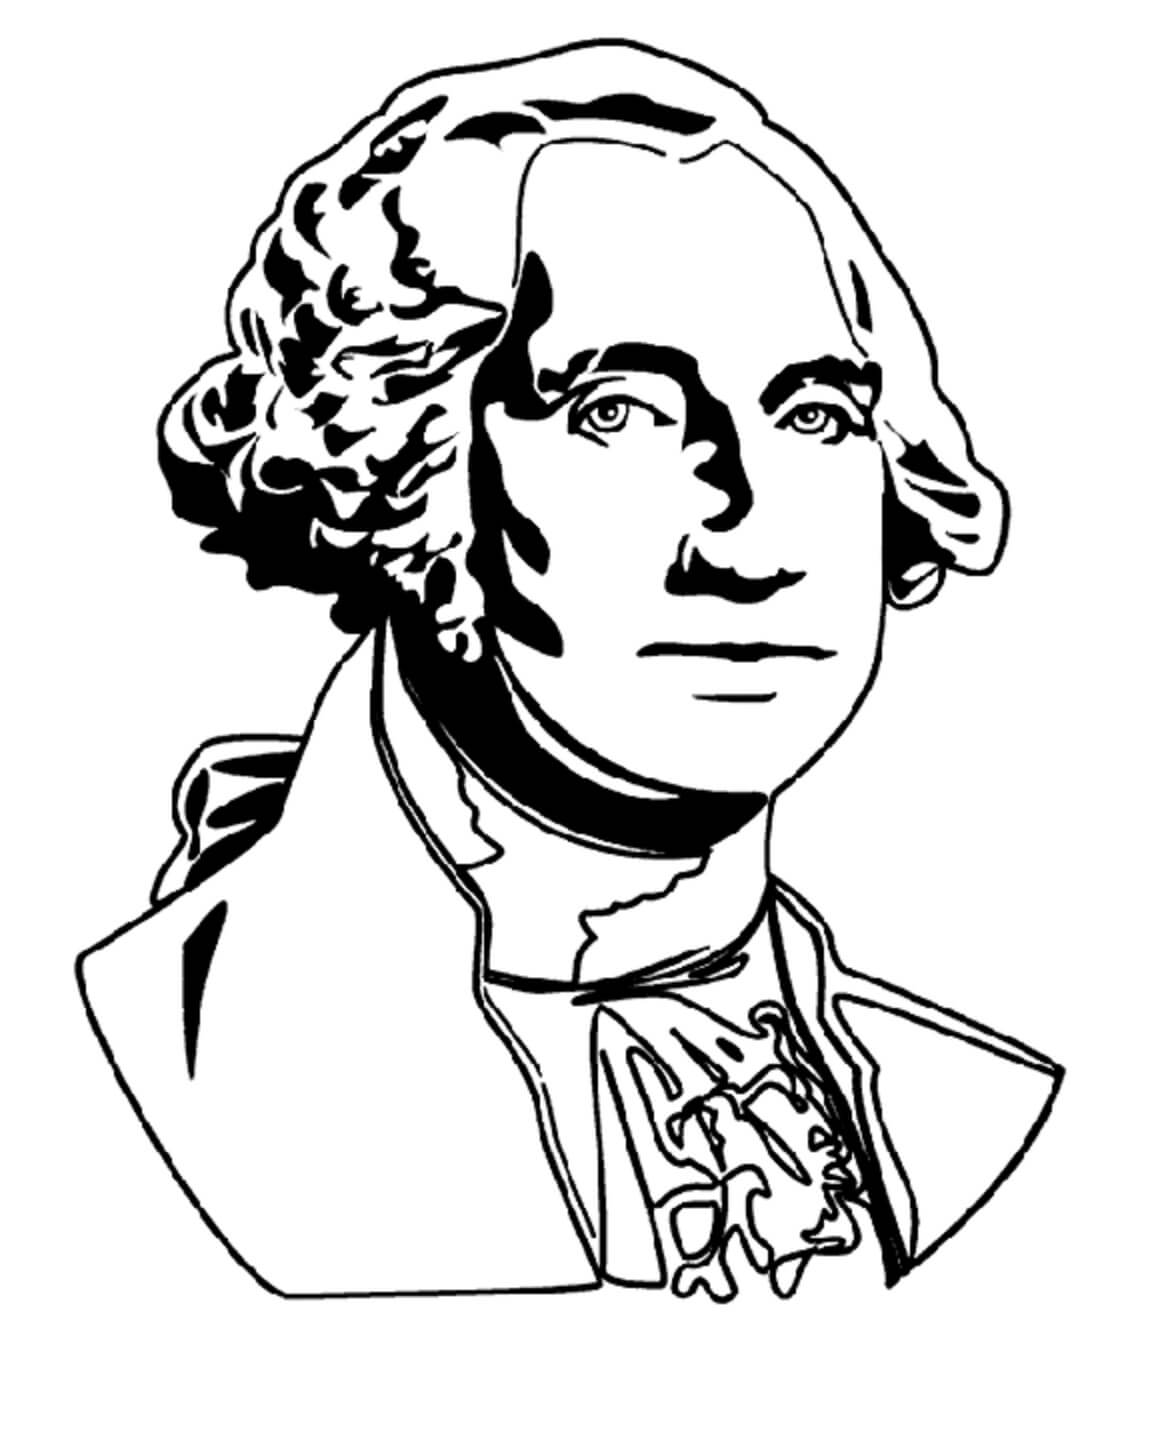 George Washington Symbol coloring page - Download, Print or Color ...